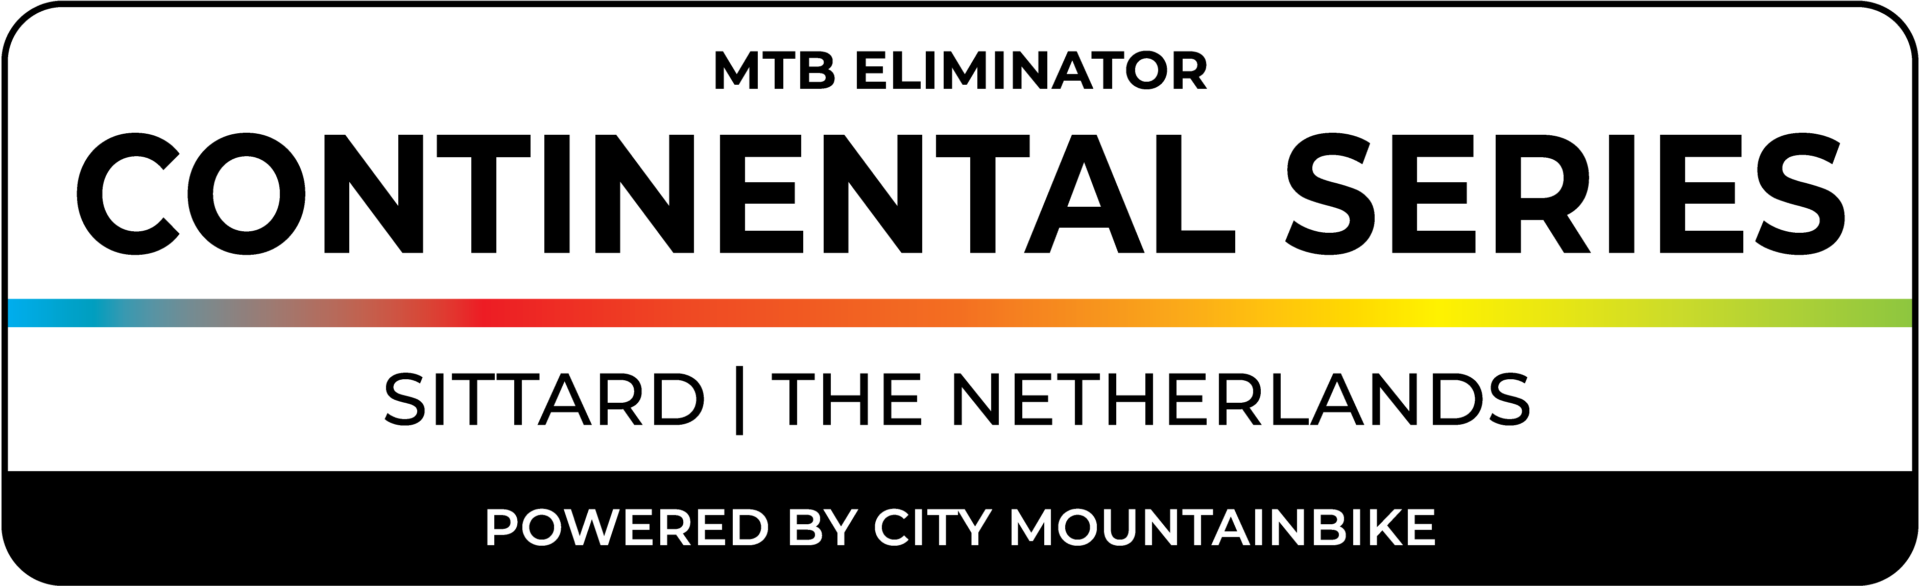 Continental Series Sittard NED